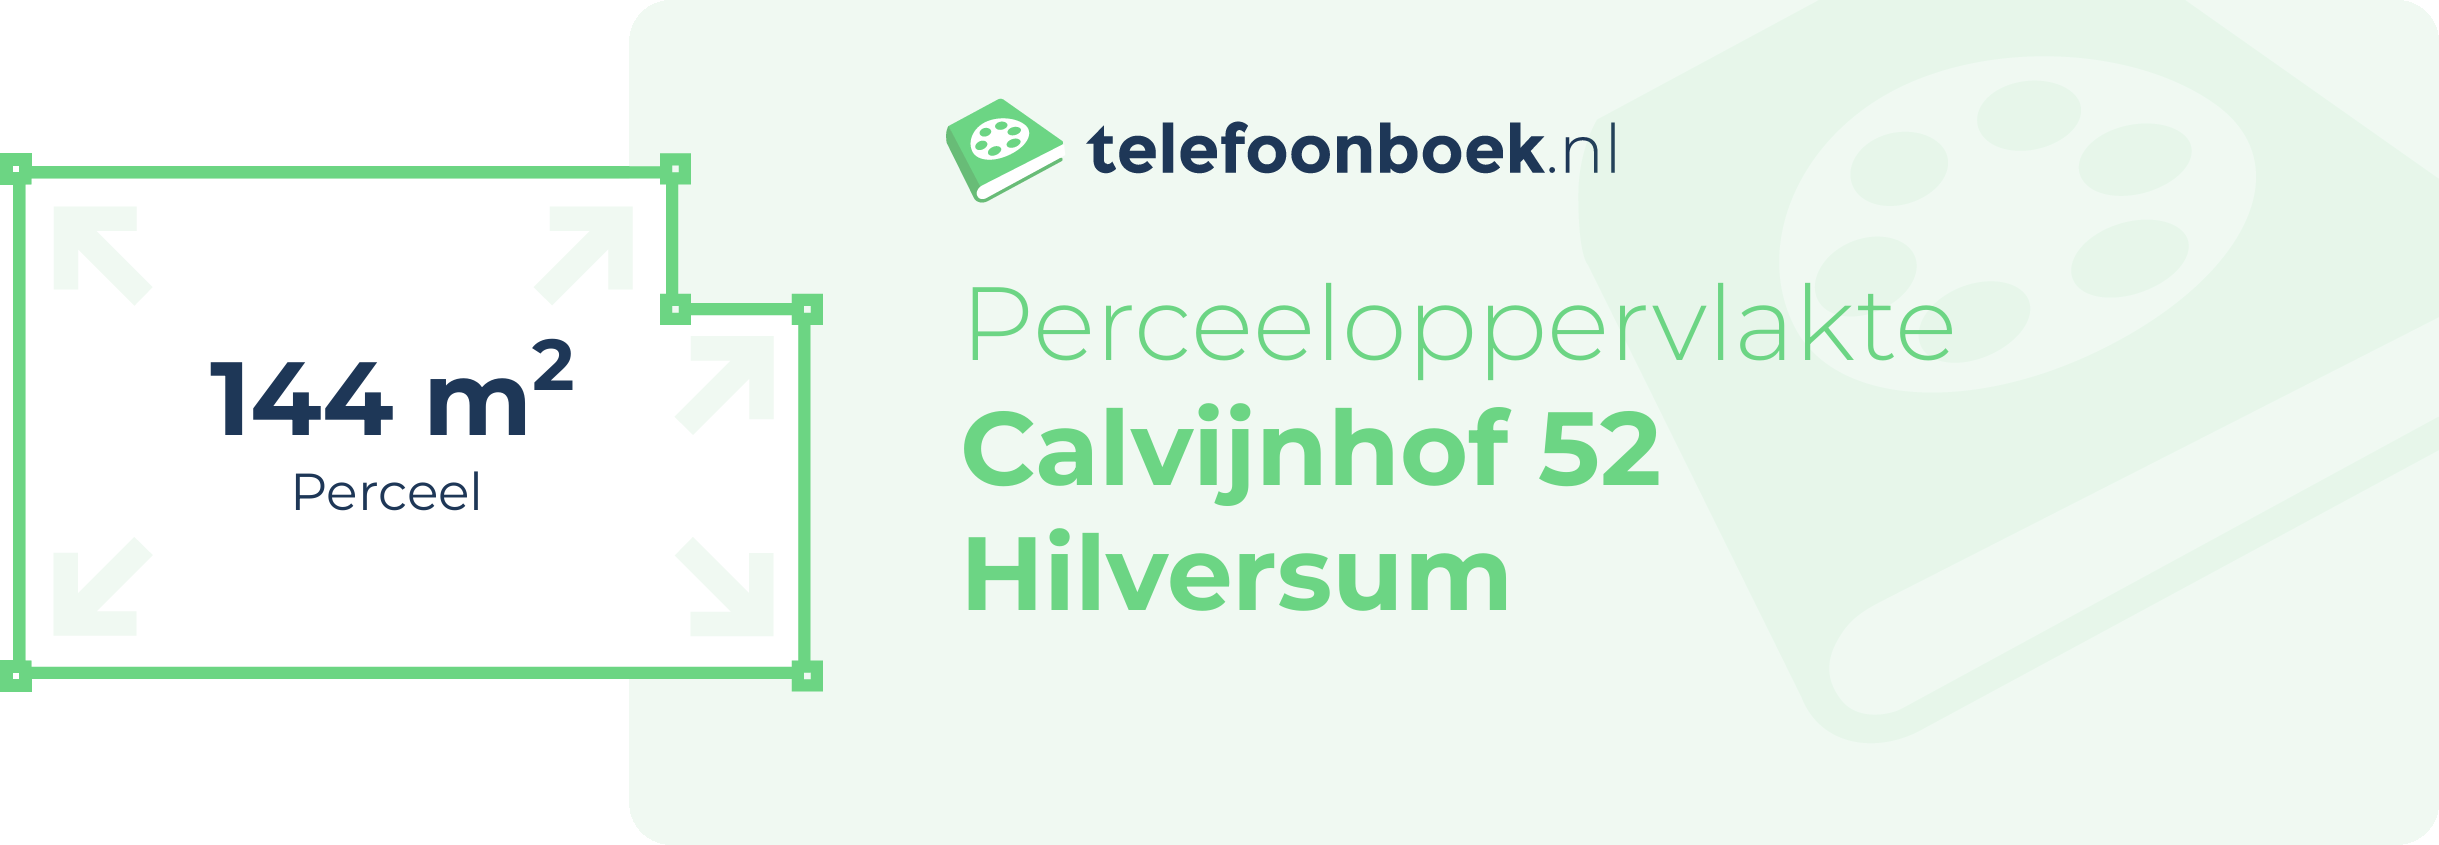 Perceeloppervlakte Calvijnhof 52 Hilversum